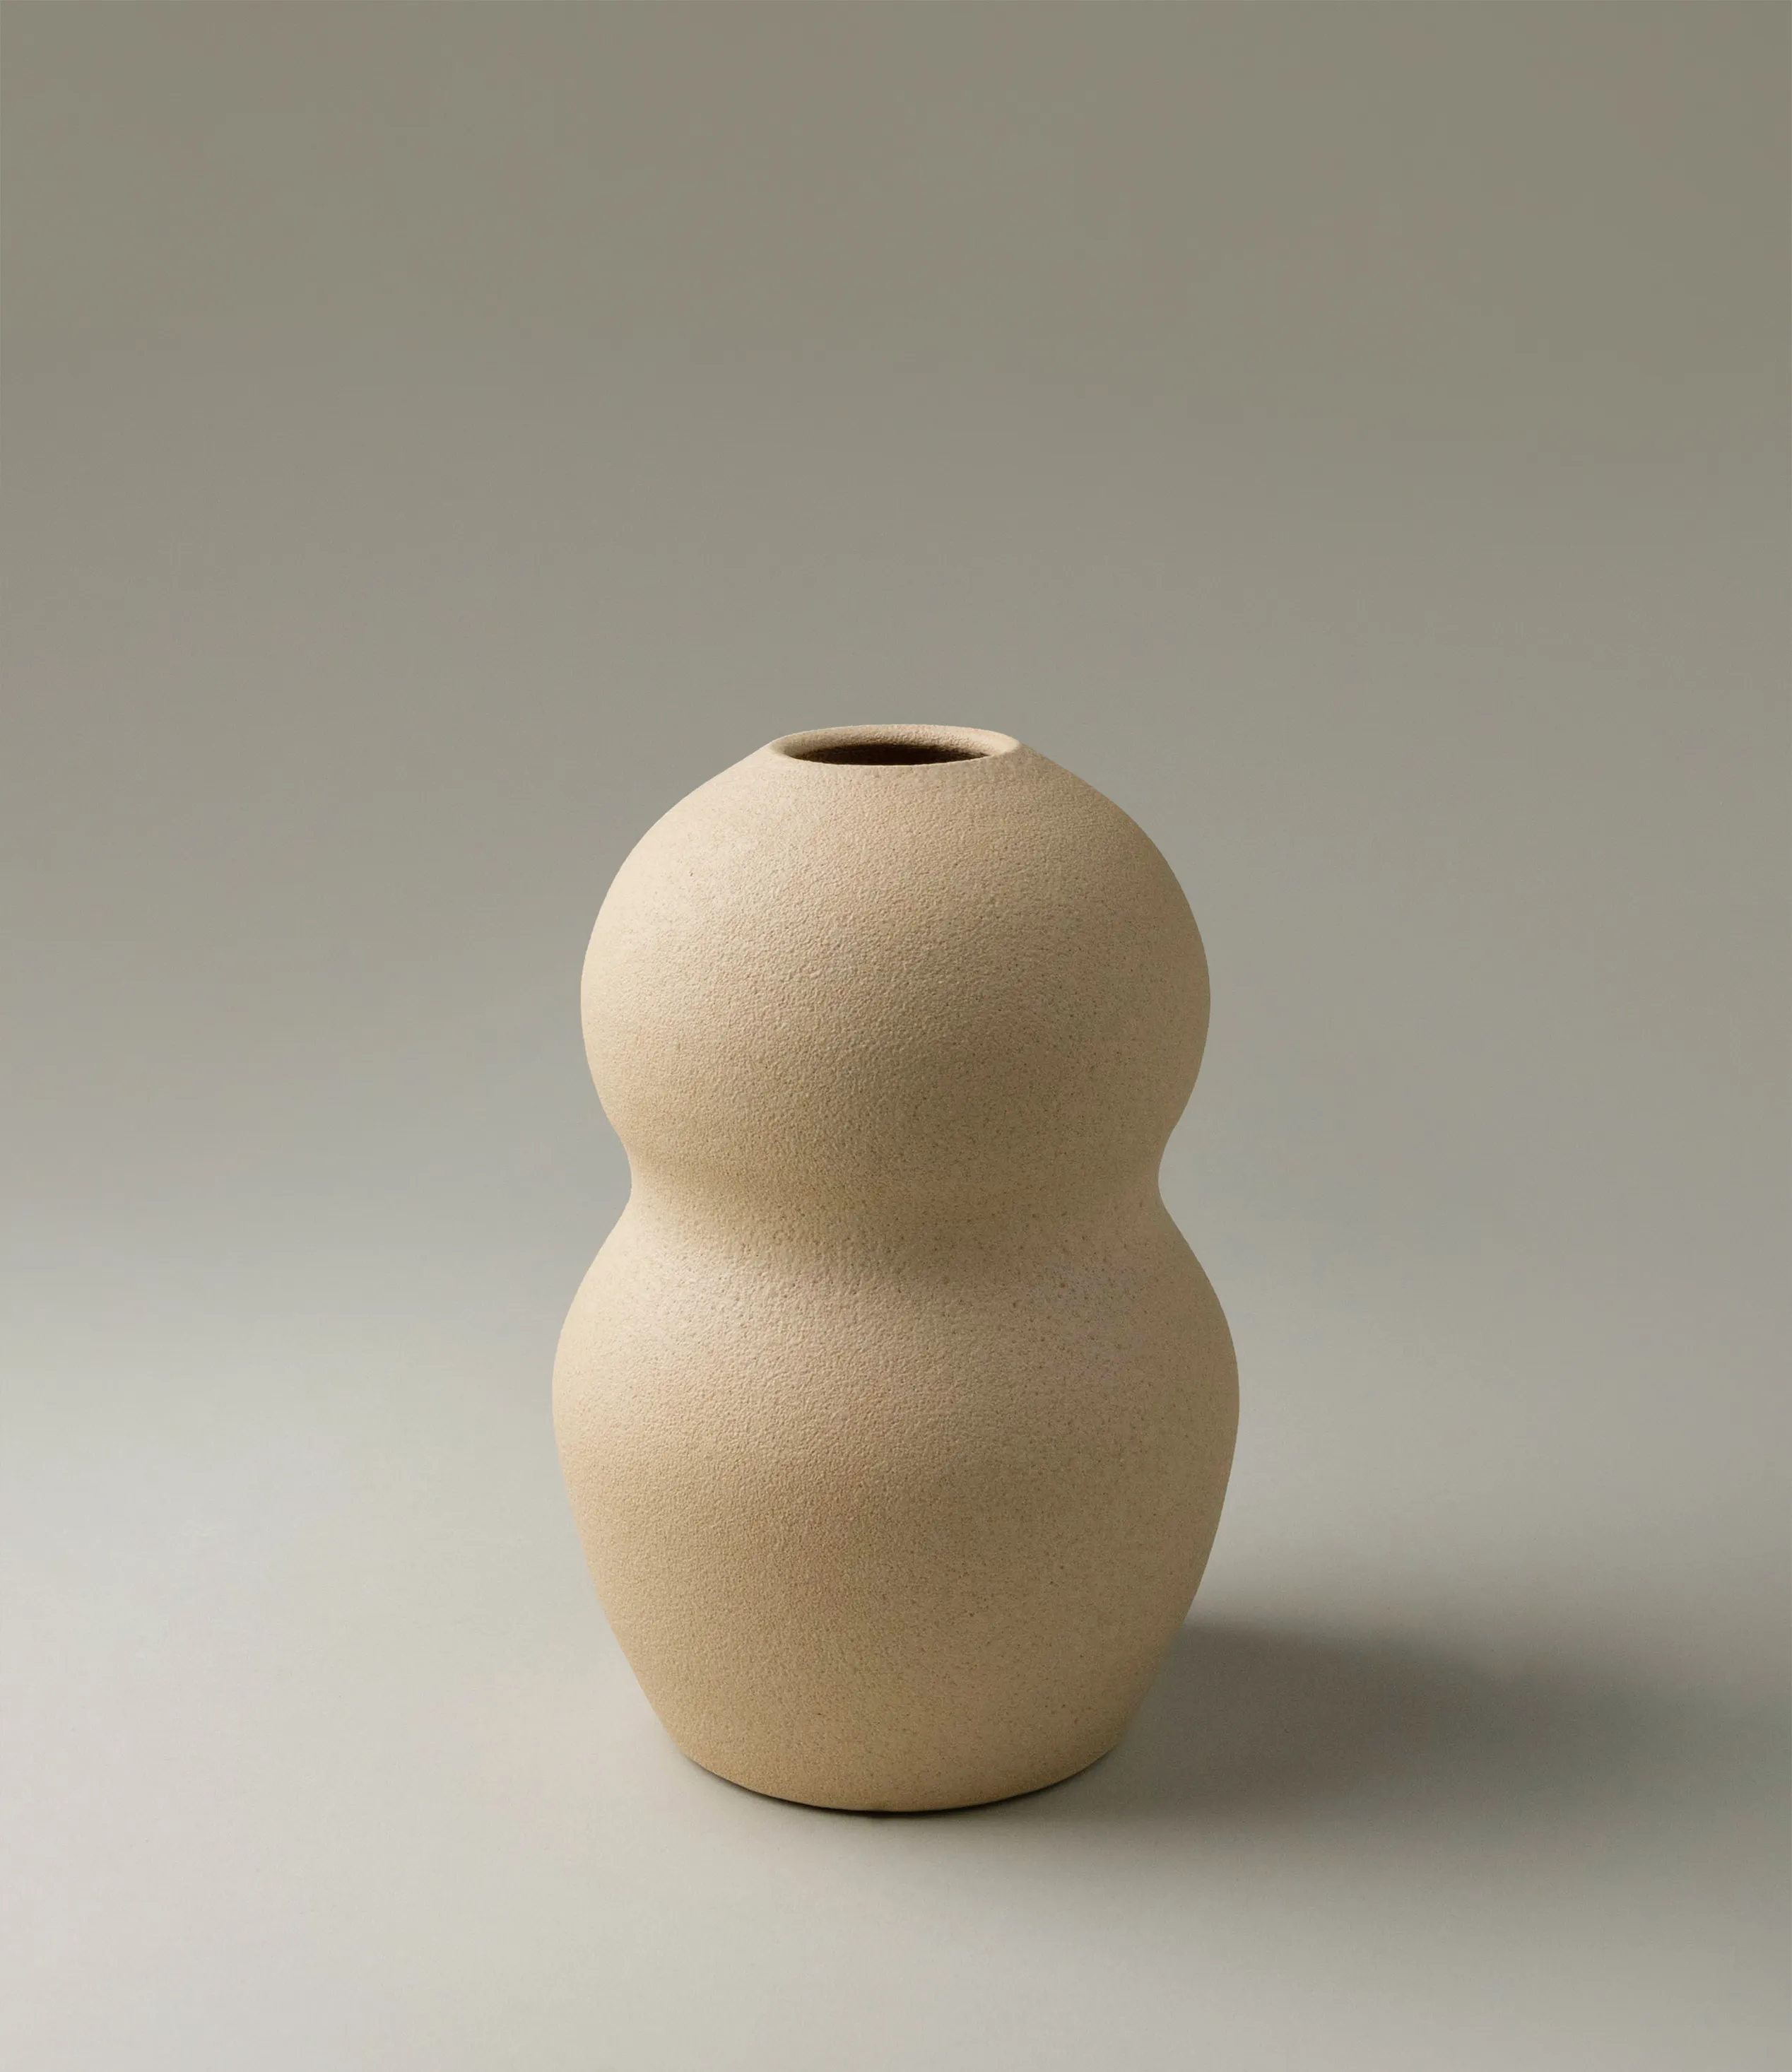 Palus Handmade Vase from Ocactuu with a Sand like finishing.